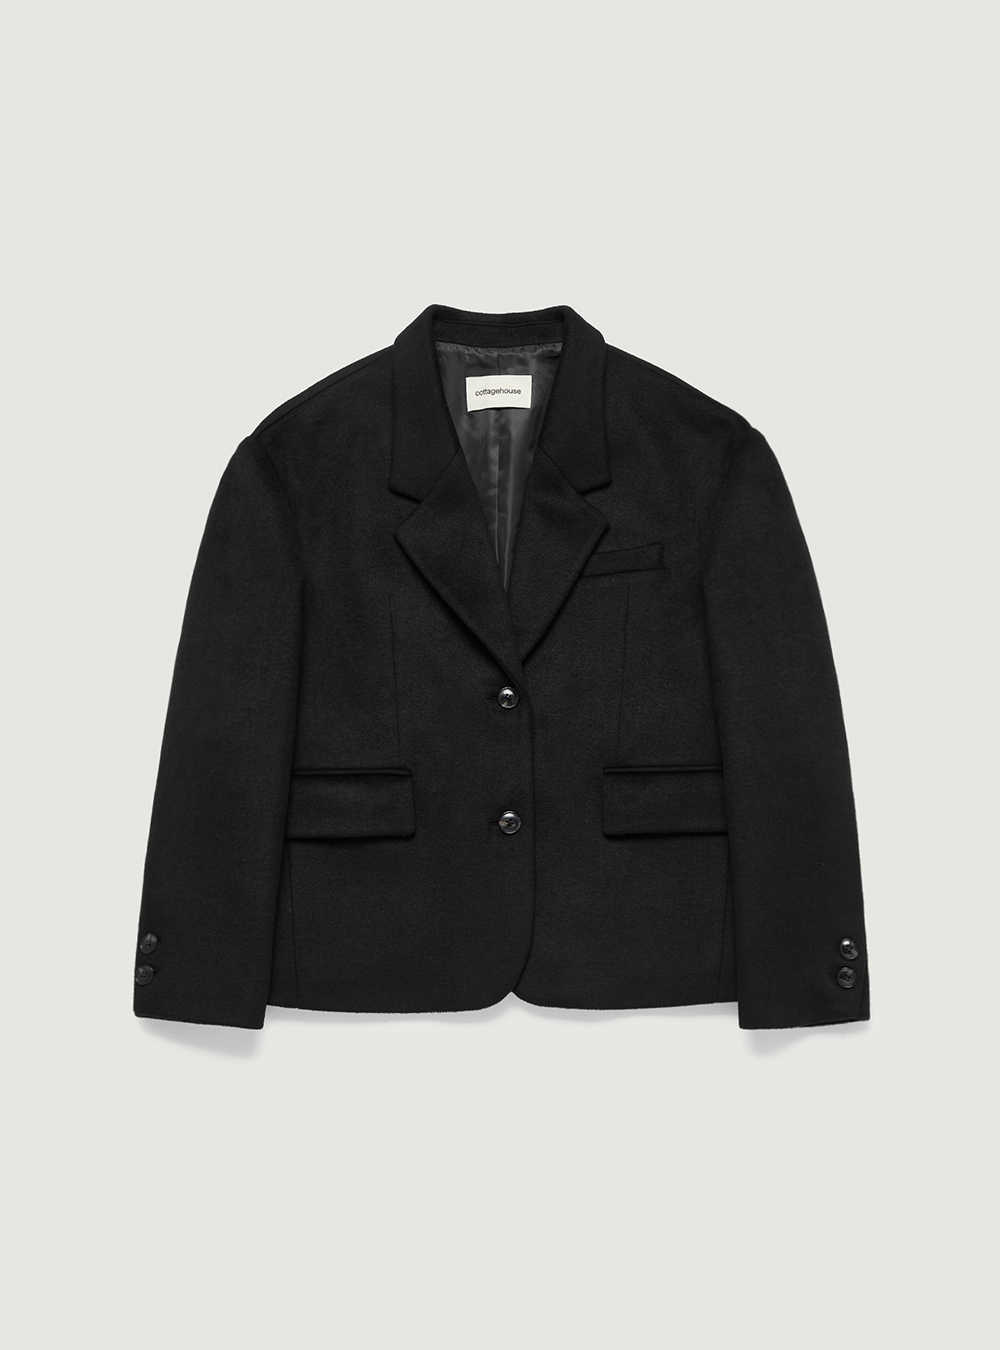 Wool classic blazer half coat. Black